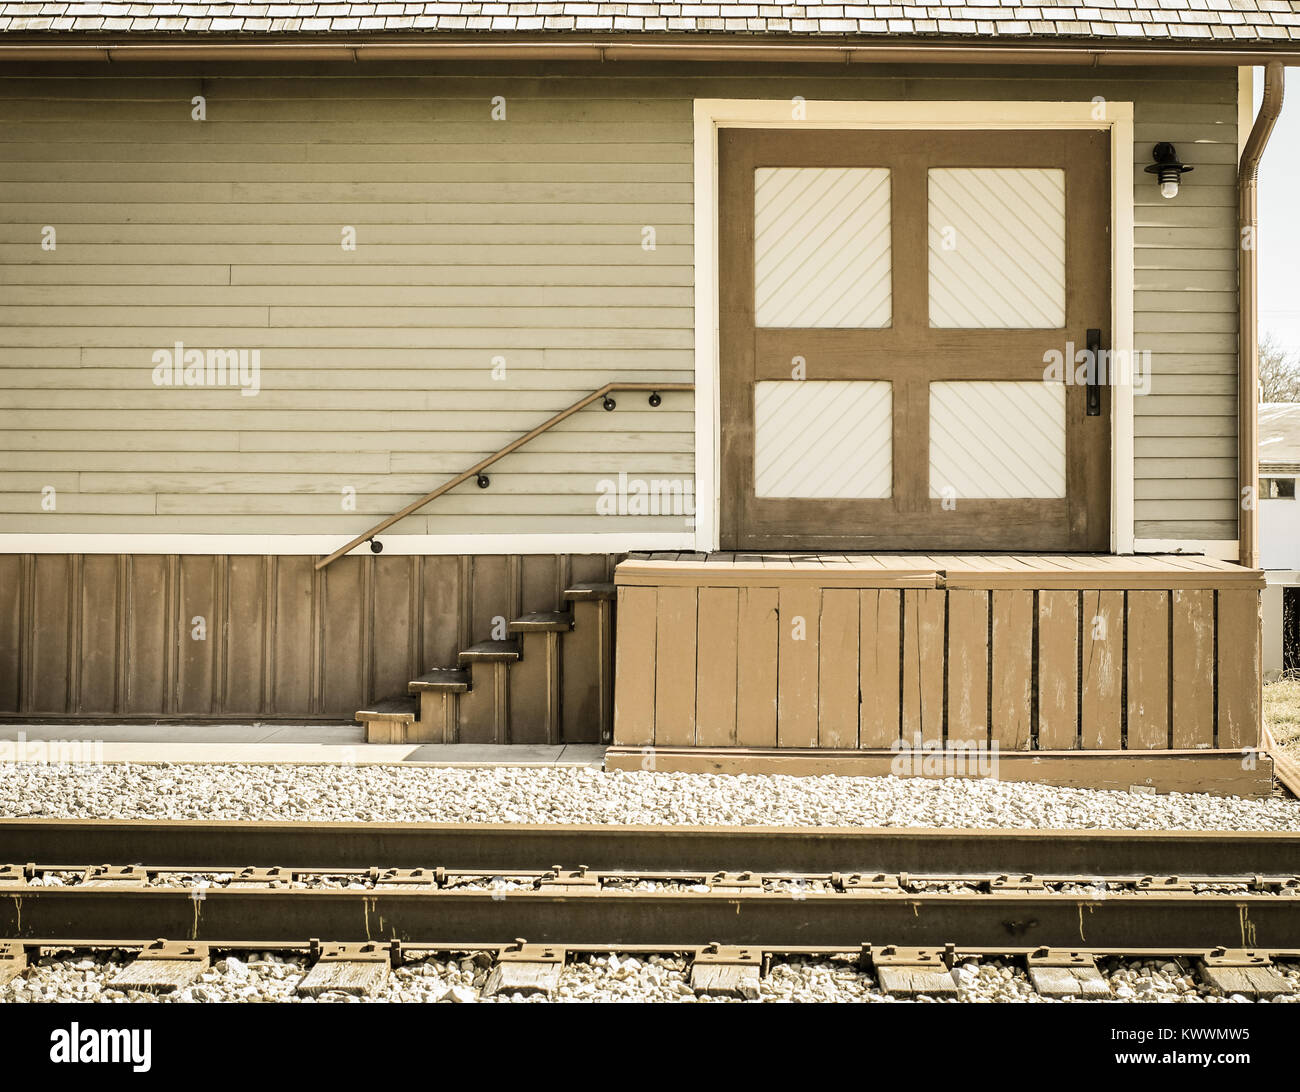 Historic Train Station Platform. Historical train station platform in the American Midwest. Stock Photo